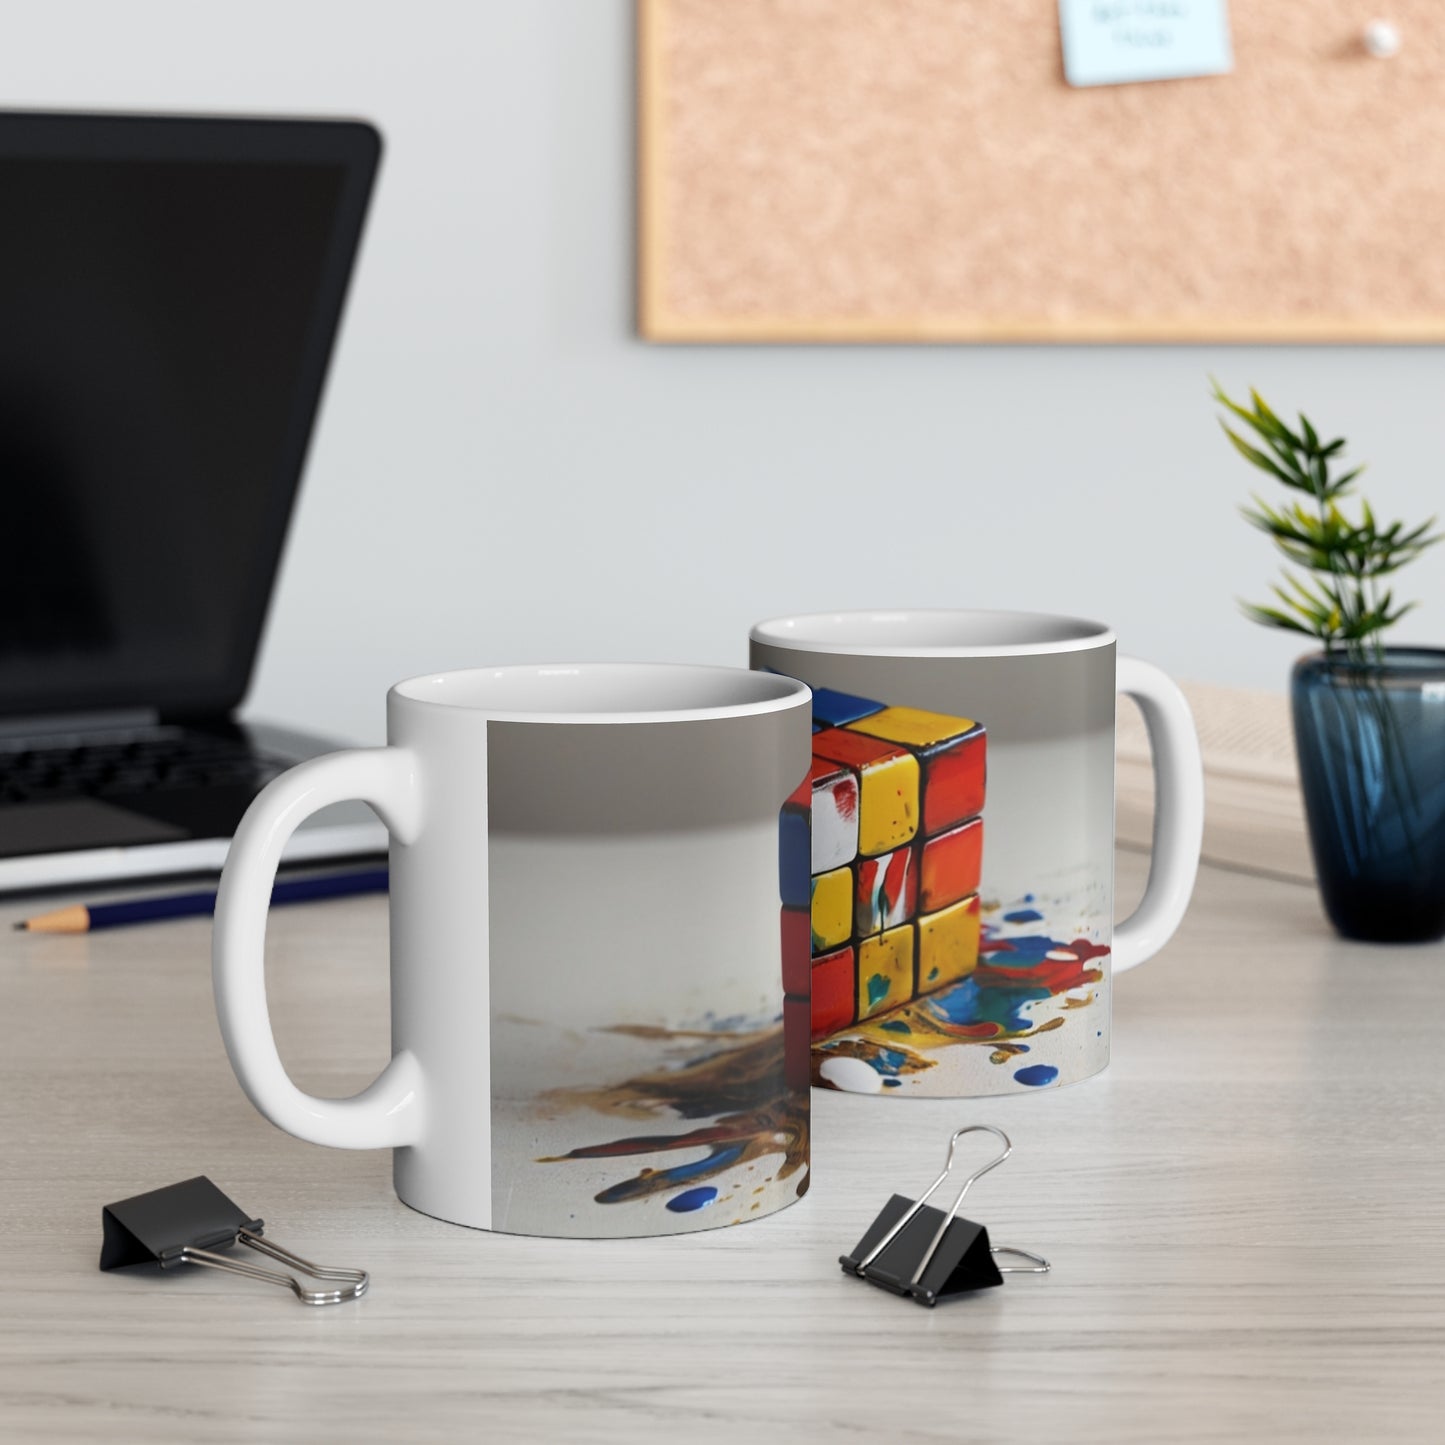 Messy Paint Covered Rubik's Cube Mug - Ceramic Coffee Mug 11oz